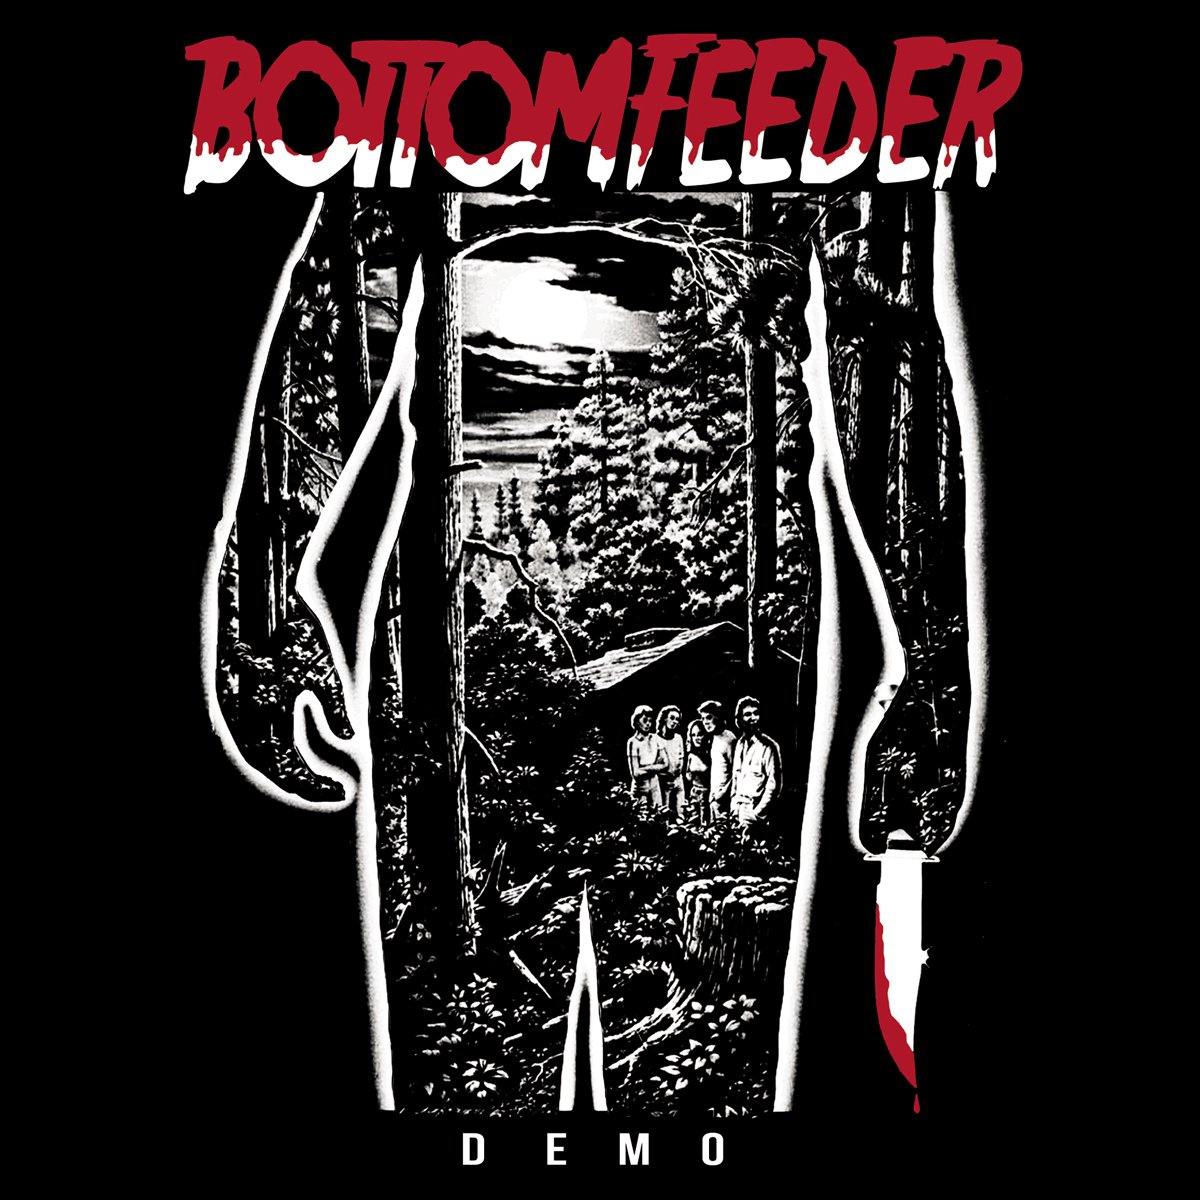 Buy – Bottomfeeder "Demo" Digital Download – Band & Music Merch – Cold Cuts Merch